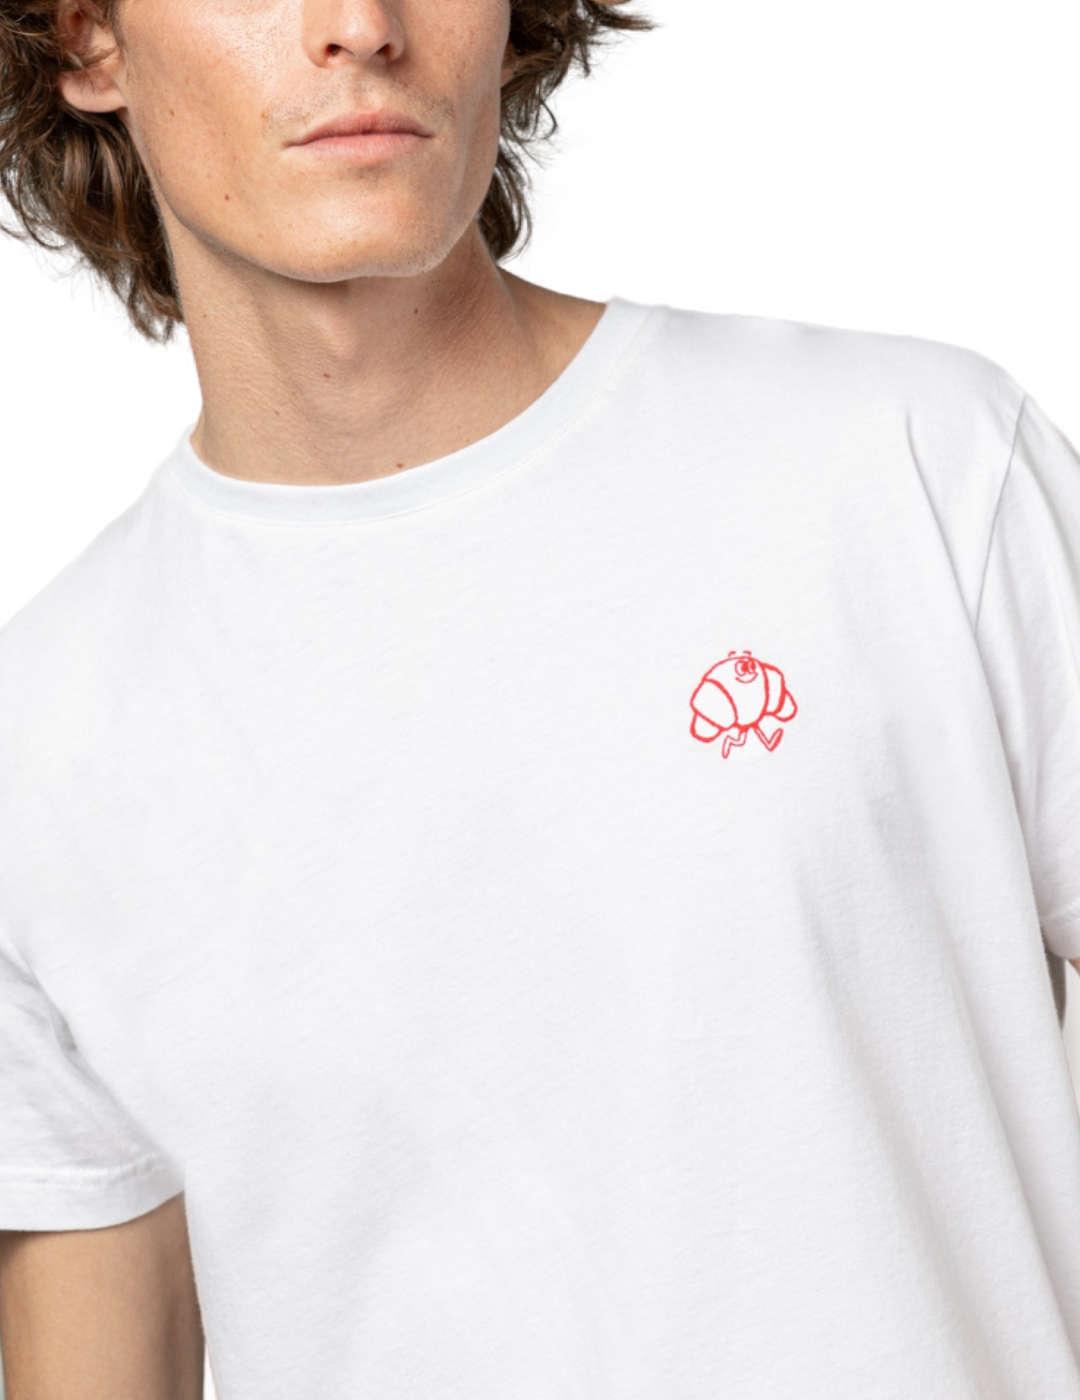 Camiseta Scotta Croissant blanco manga corta para hombre